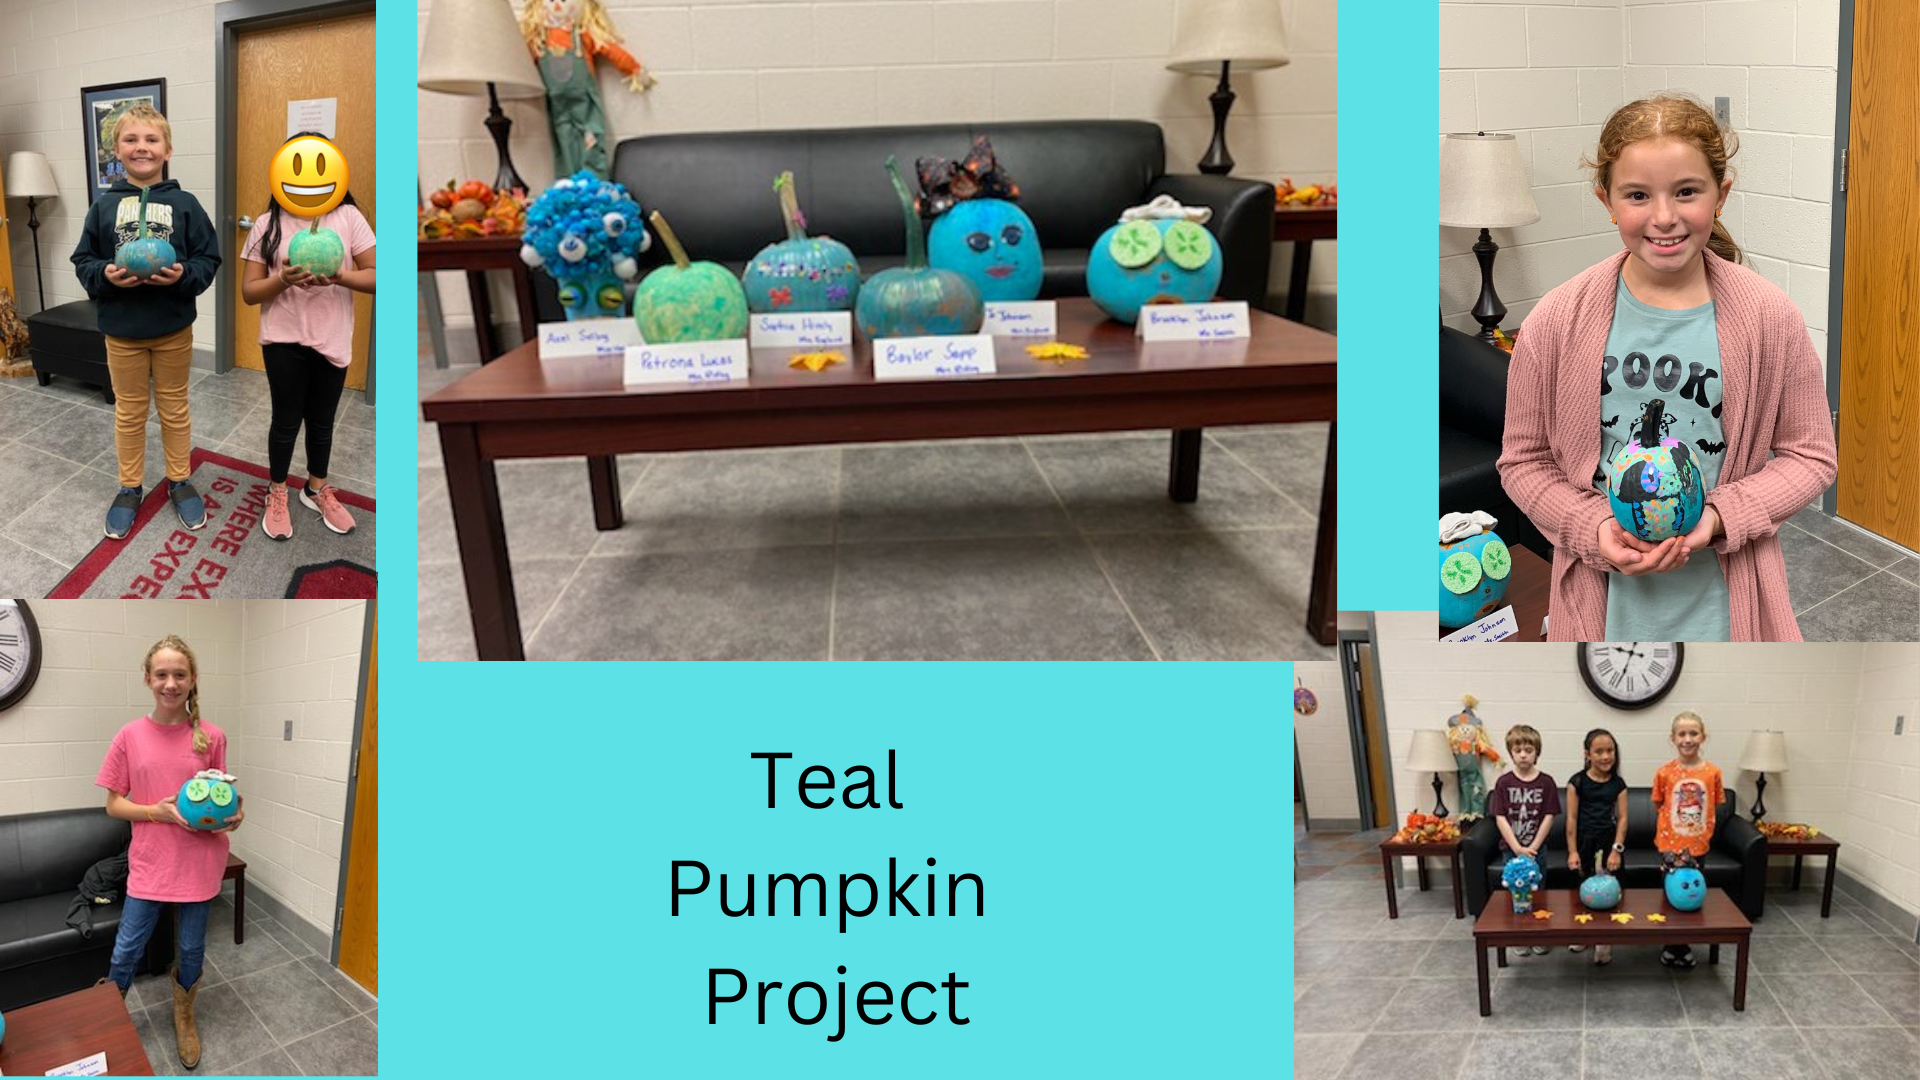 Teal Pumpkin Contest Participants with their pumpkins